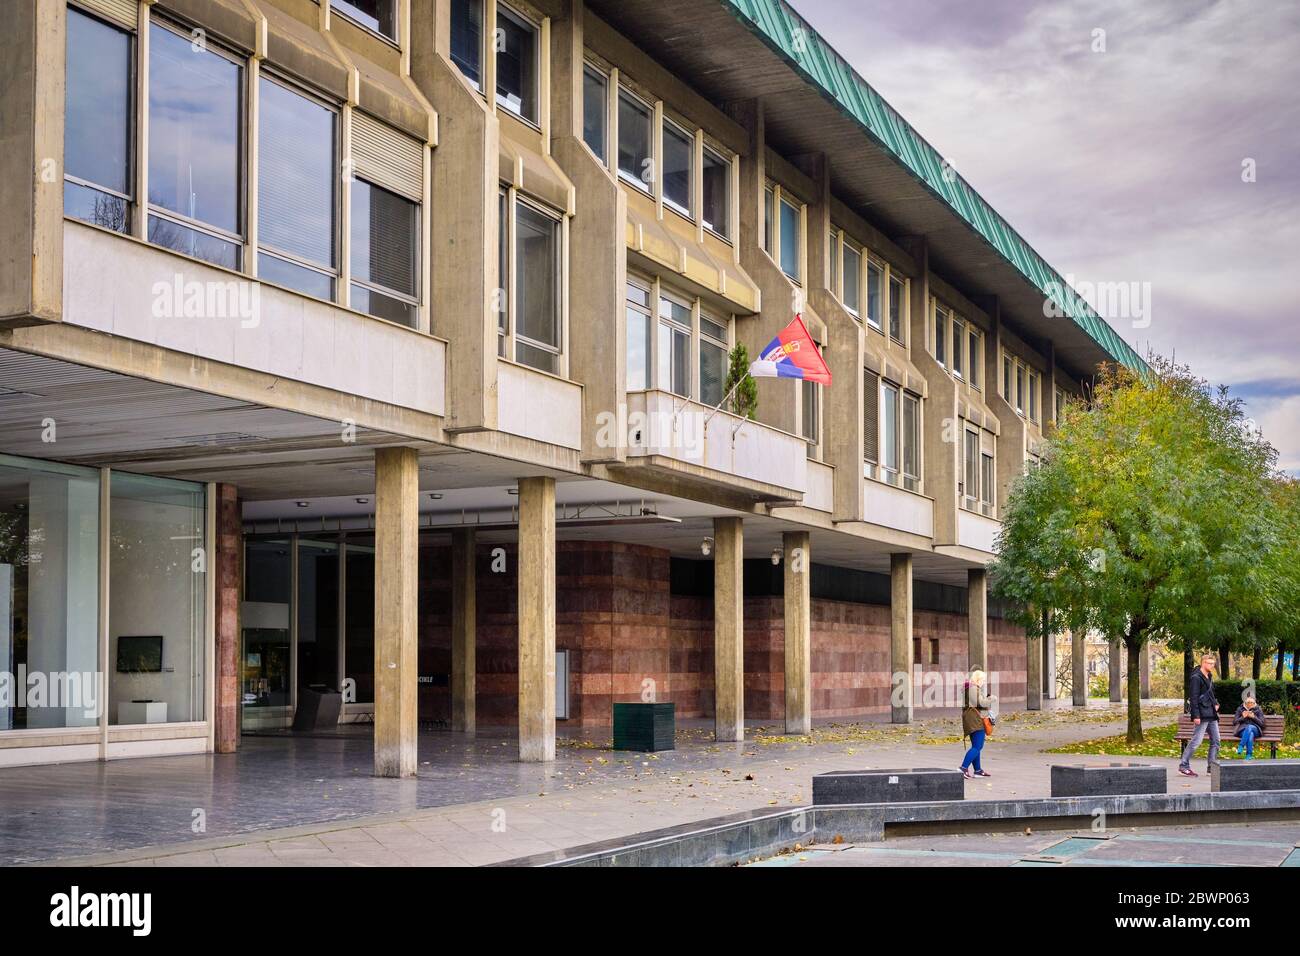 Belgrad / Serbien - 24. November 2019: Die Nationalbibliothek Serbiens (Narodna biblioteka Srbije) auf dem Vracar-Plateau in Belgrad, Serbien Stockfoto